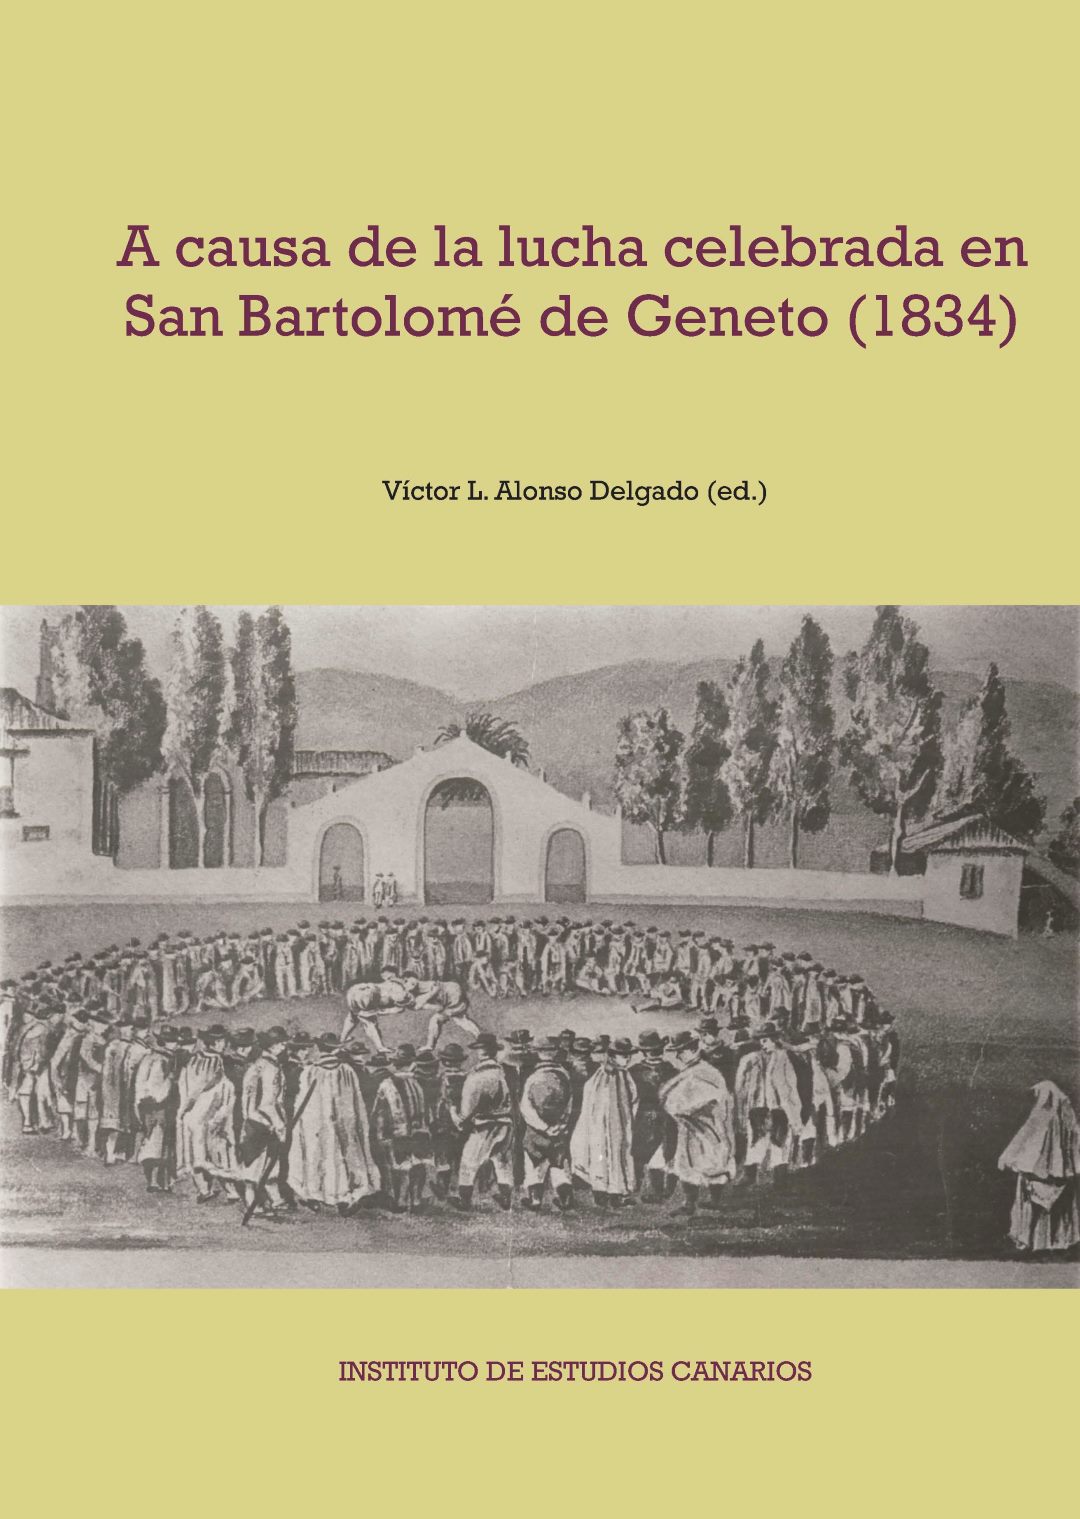 Imagen de portada del libro A causa de la lucha celebrada en San Bartolomé de Geneto (1834)